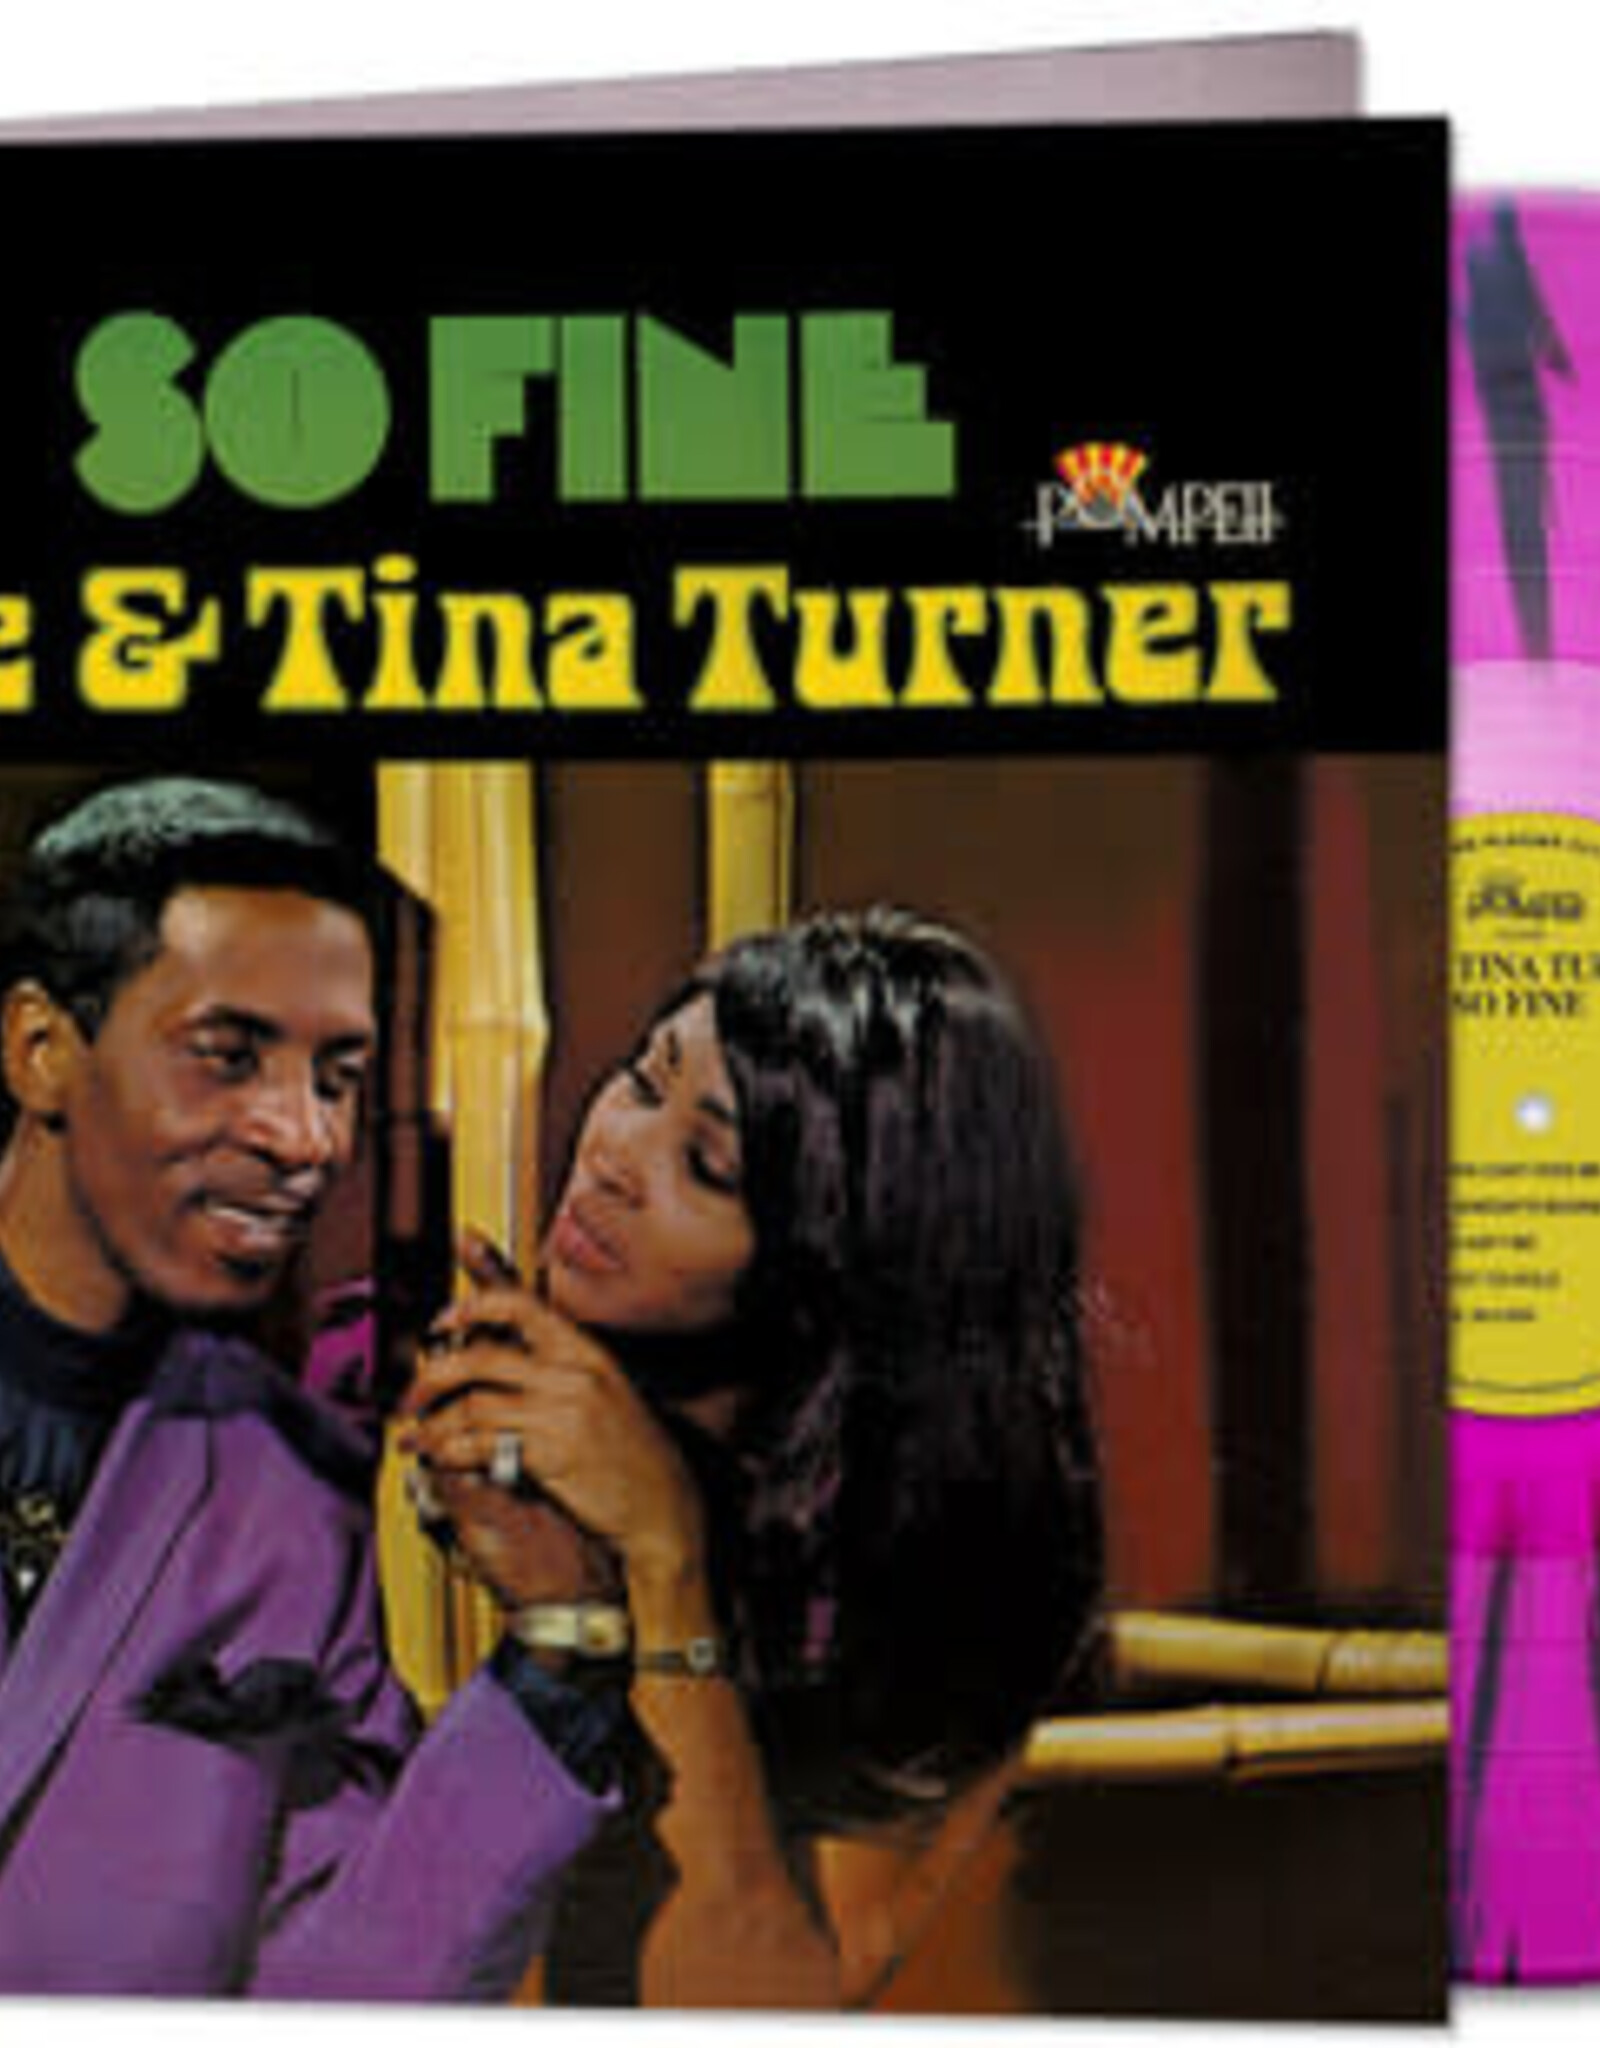 Ike and Tina Turner - So Fine (Purple & Black Splatter Vinyl)